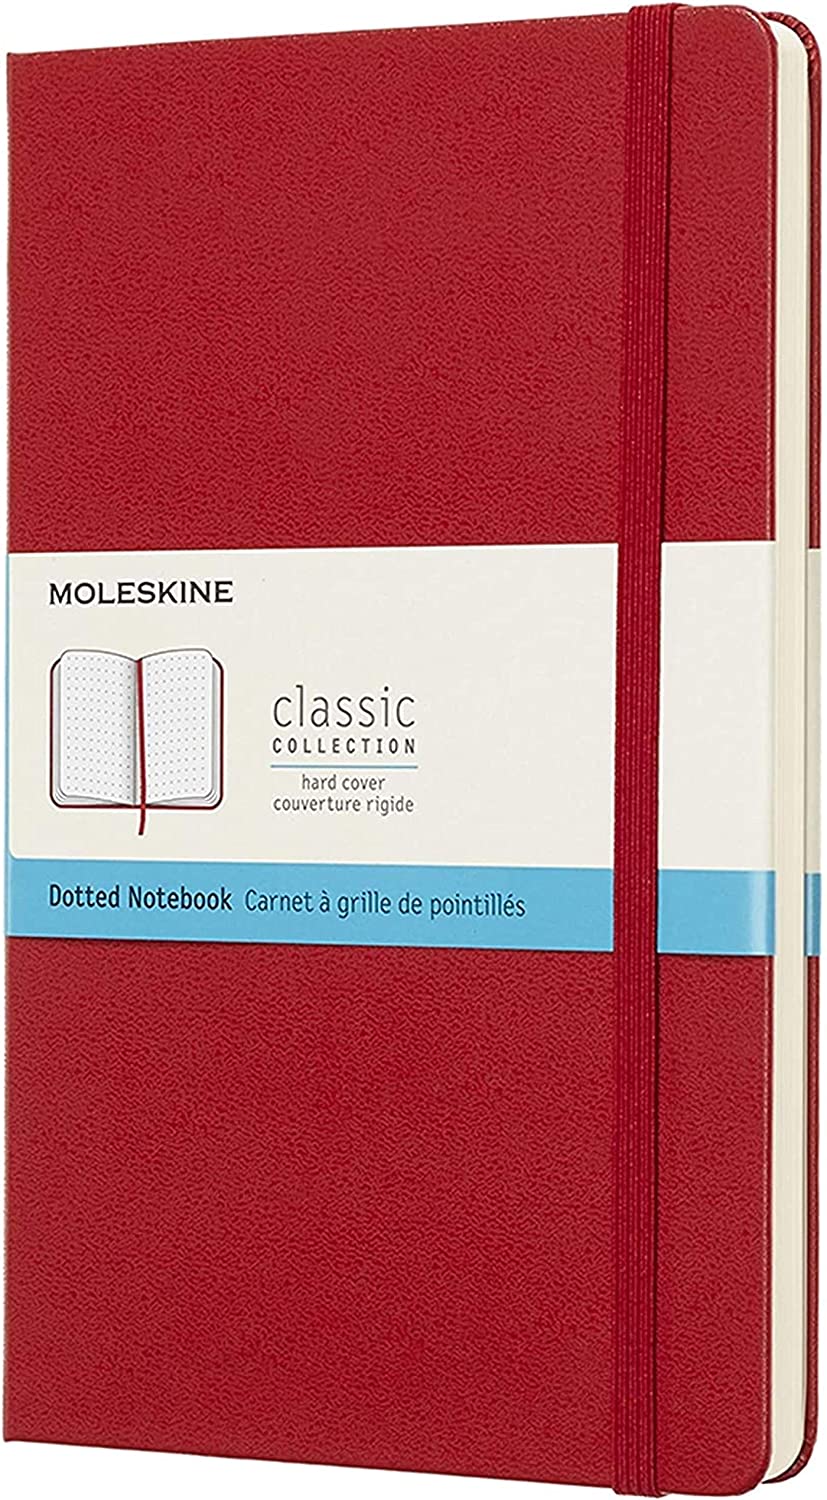 Carnet - Moleskine Classic - Hard Cover, Large, Dotted - Scarlet Red | Moleskine